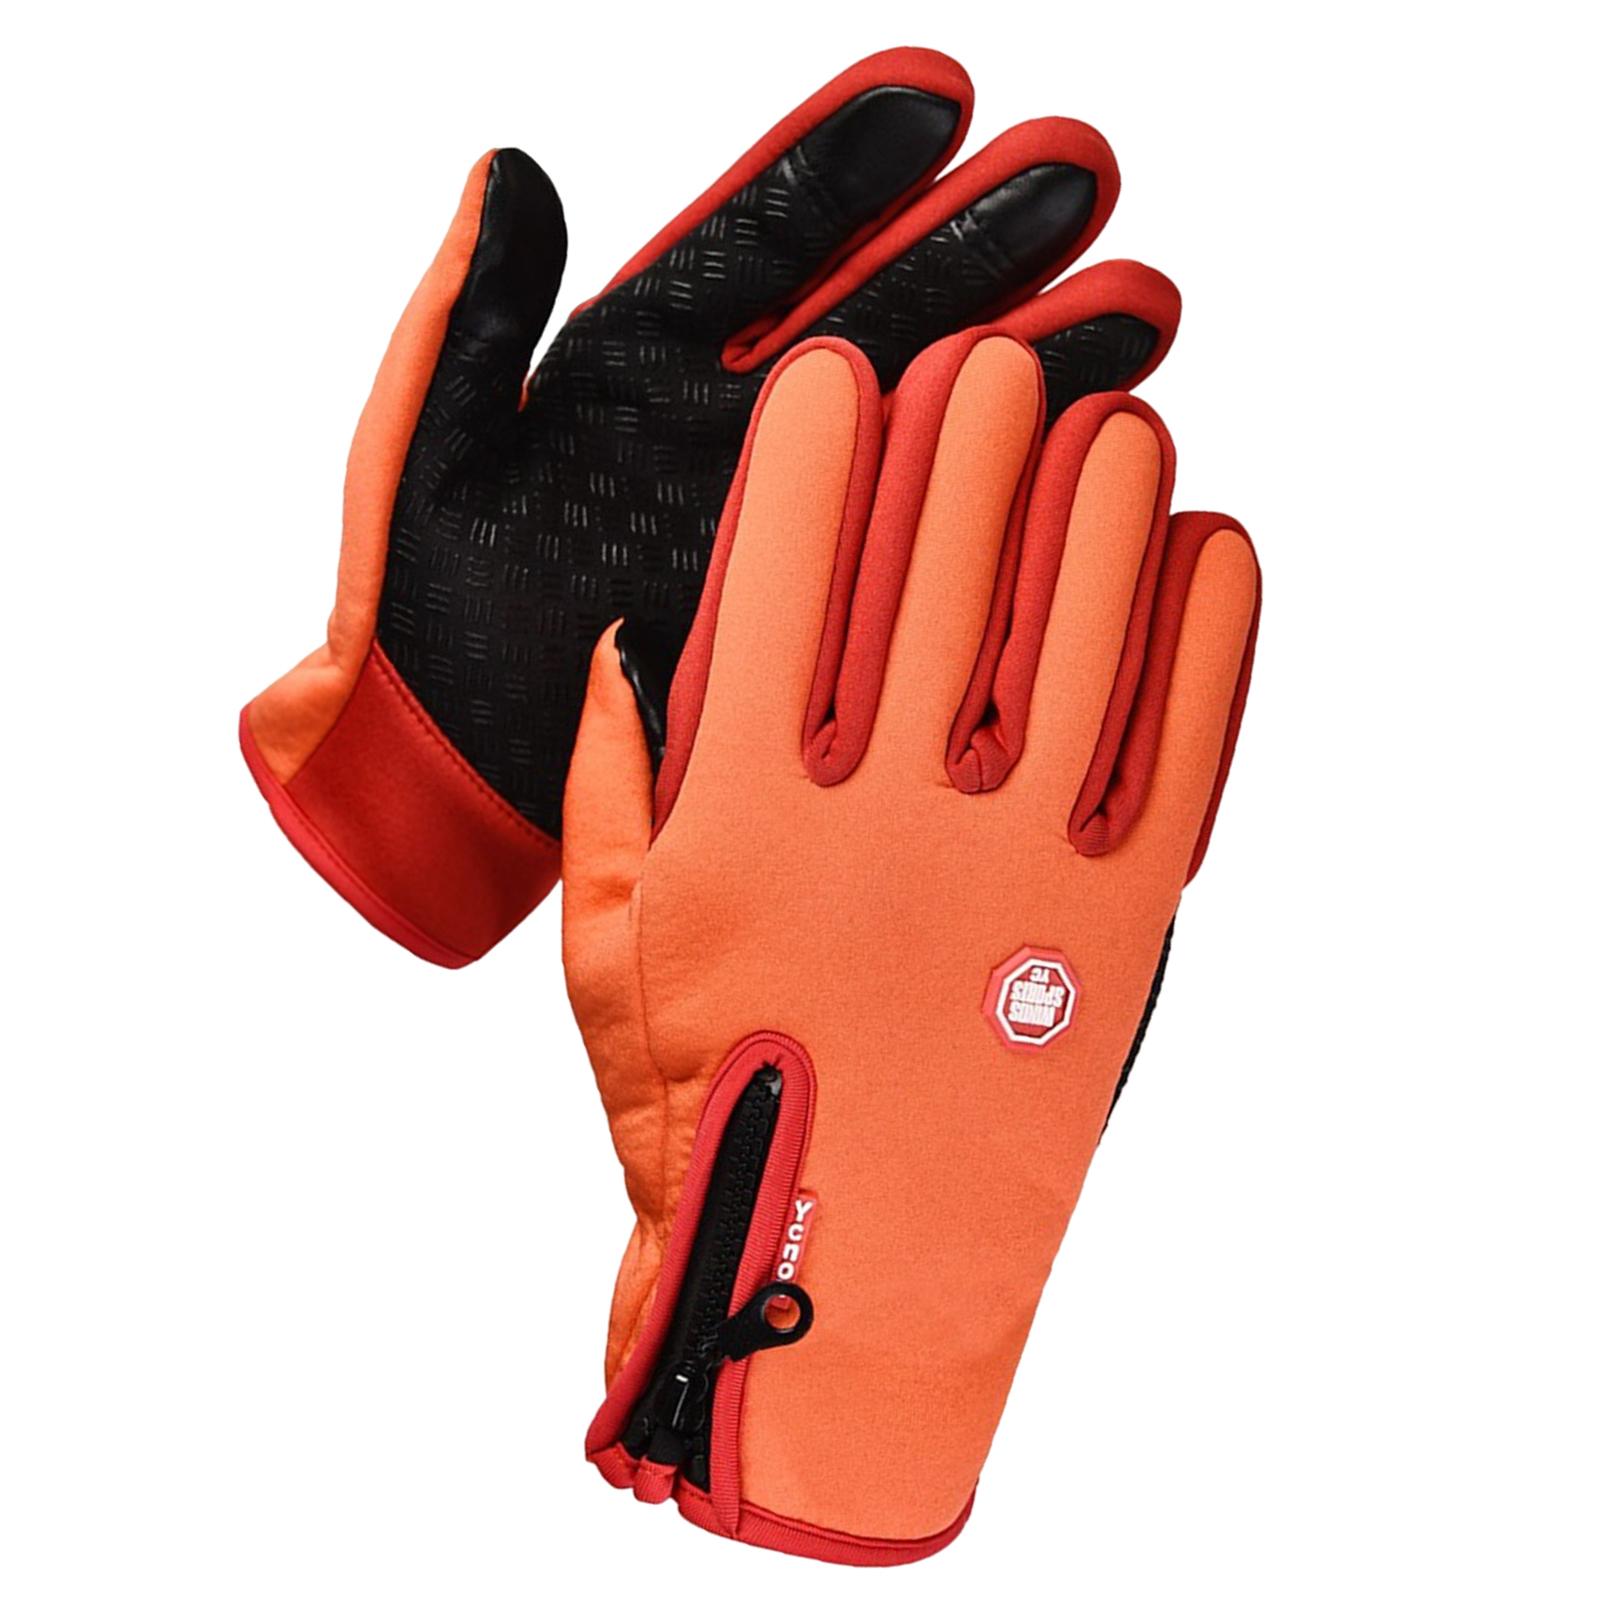 Winter Gloves Nonslip Thermal Gloves for Outdoor Running Sports Motorcycle XXL Orange